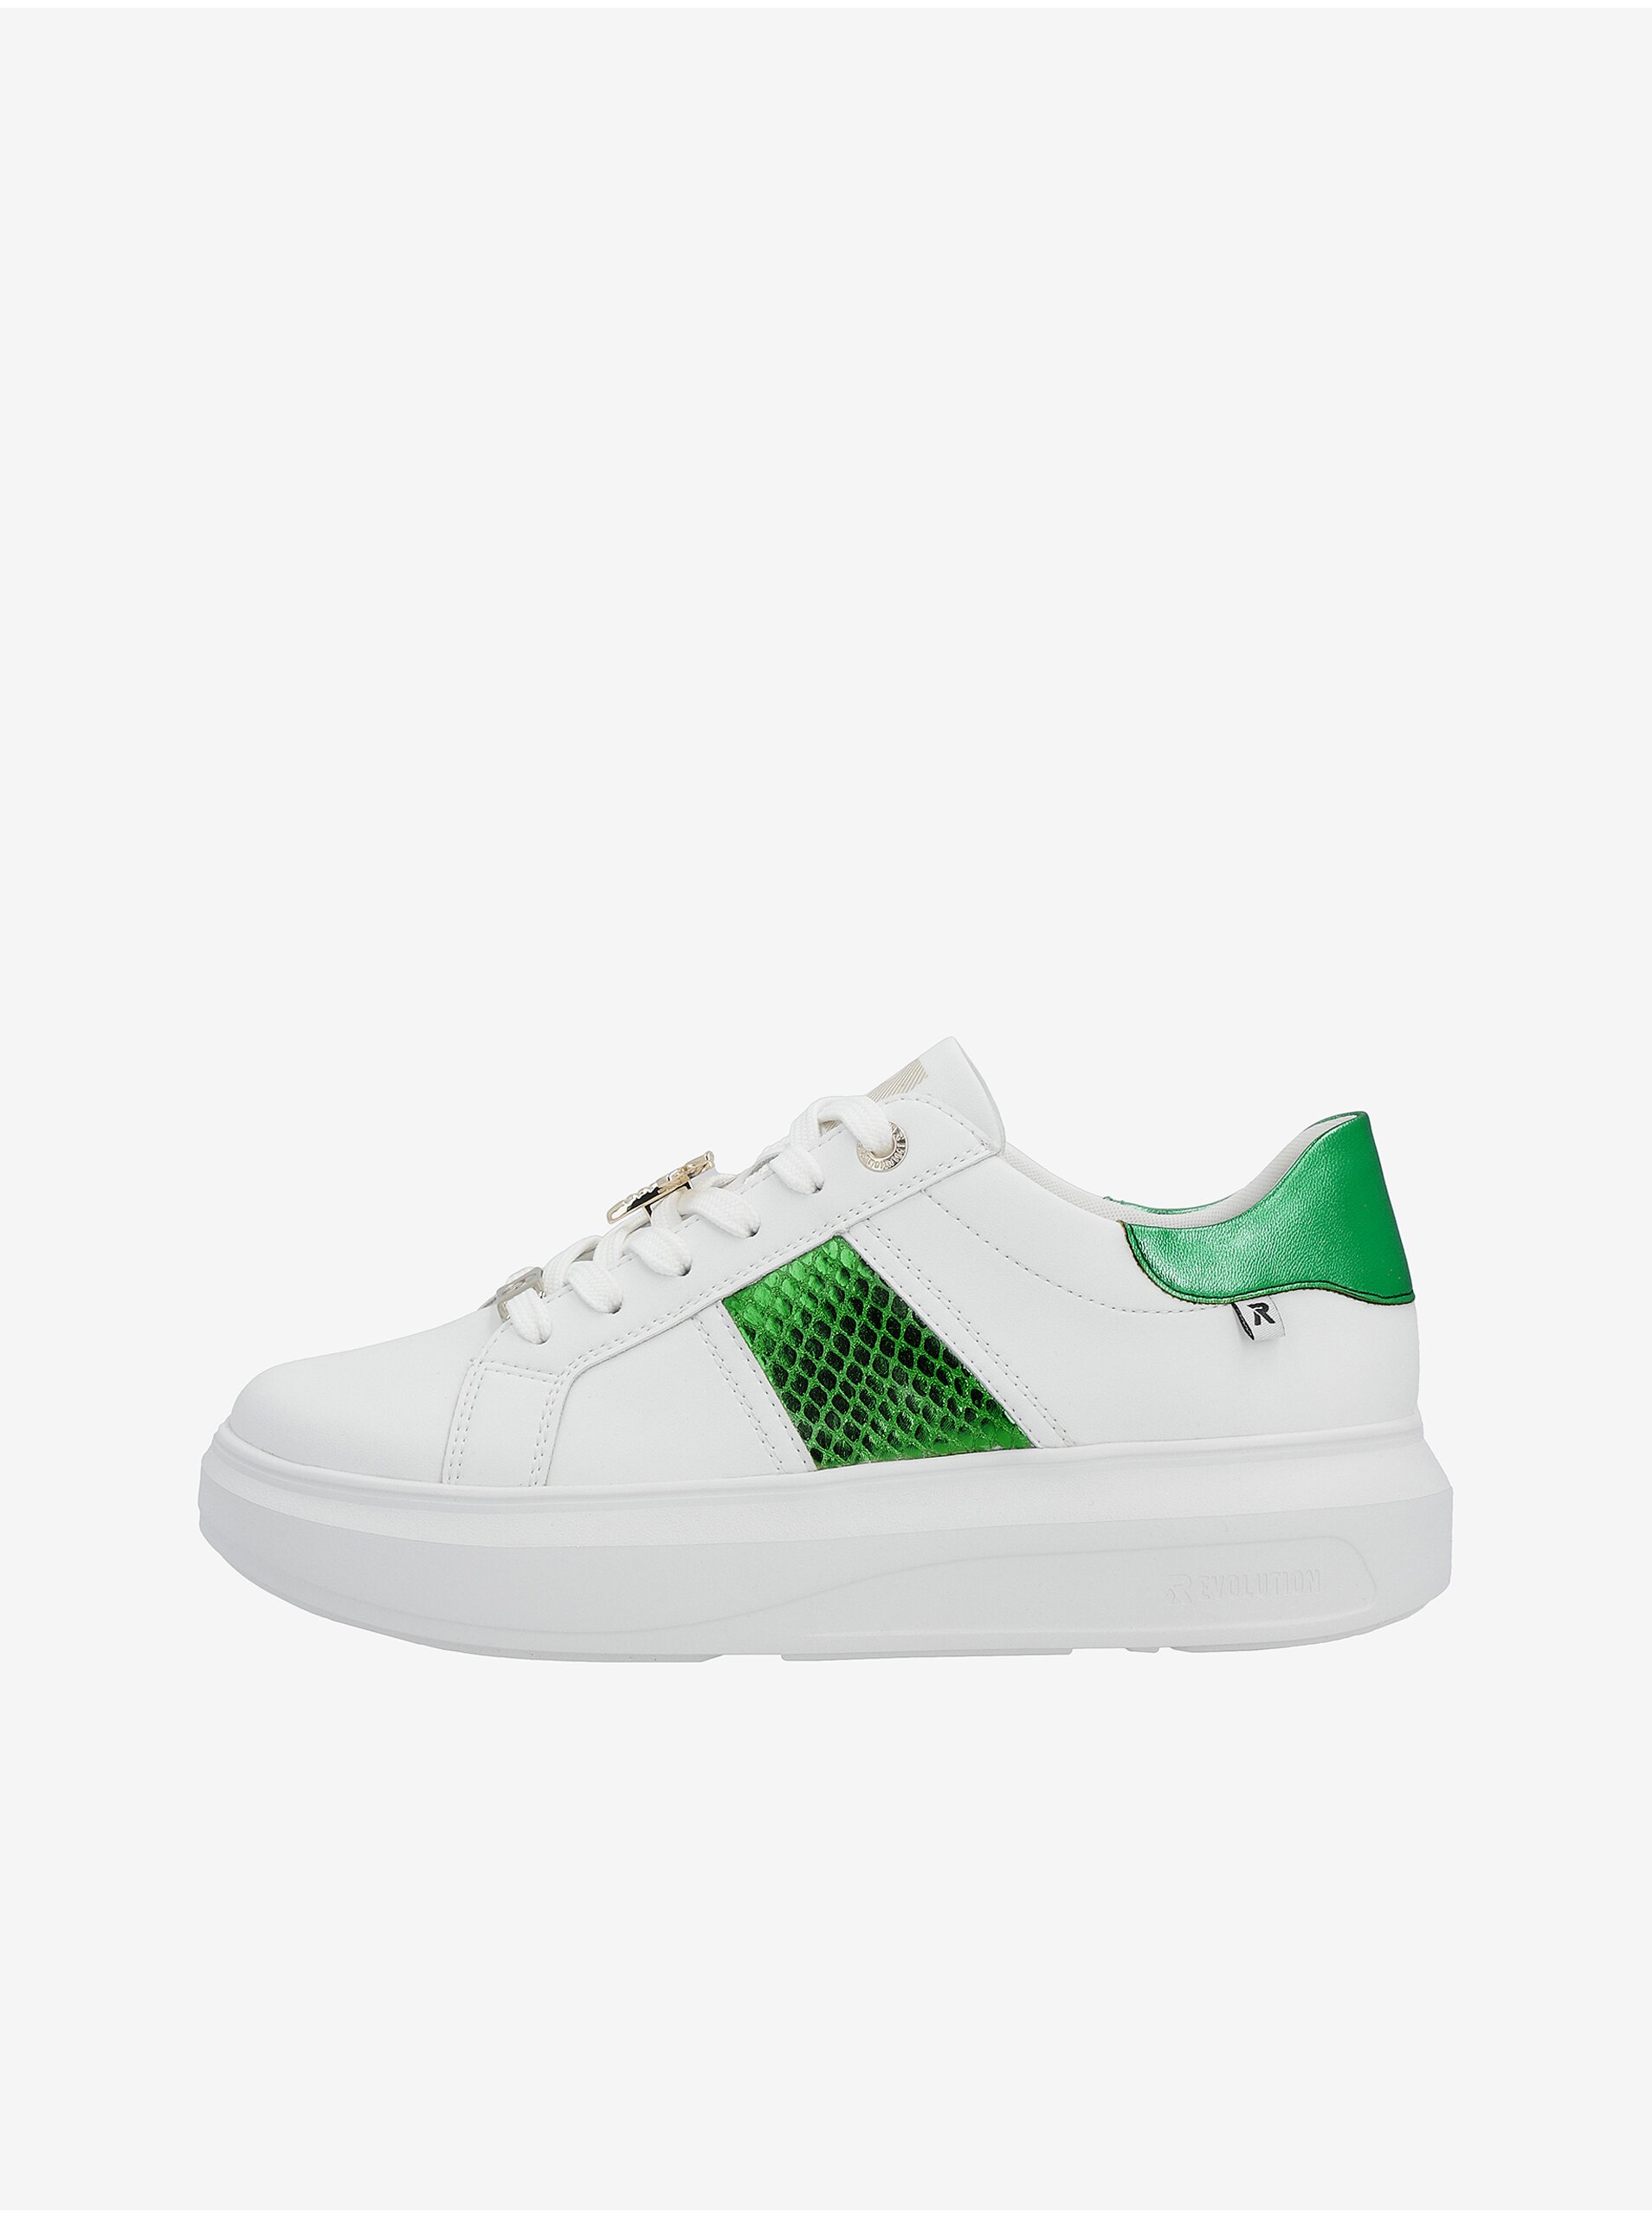 E-shop Zeleno-biele dámske kožené tenisky Rieker